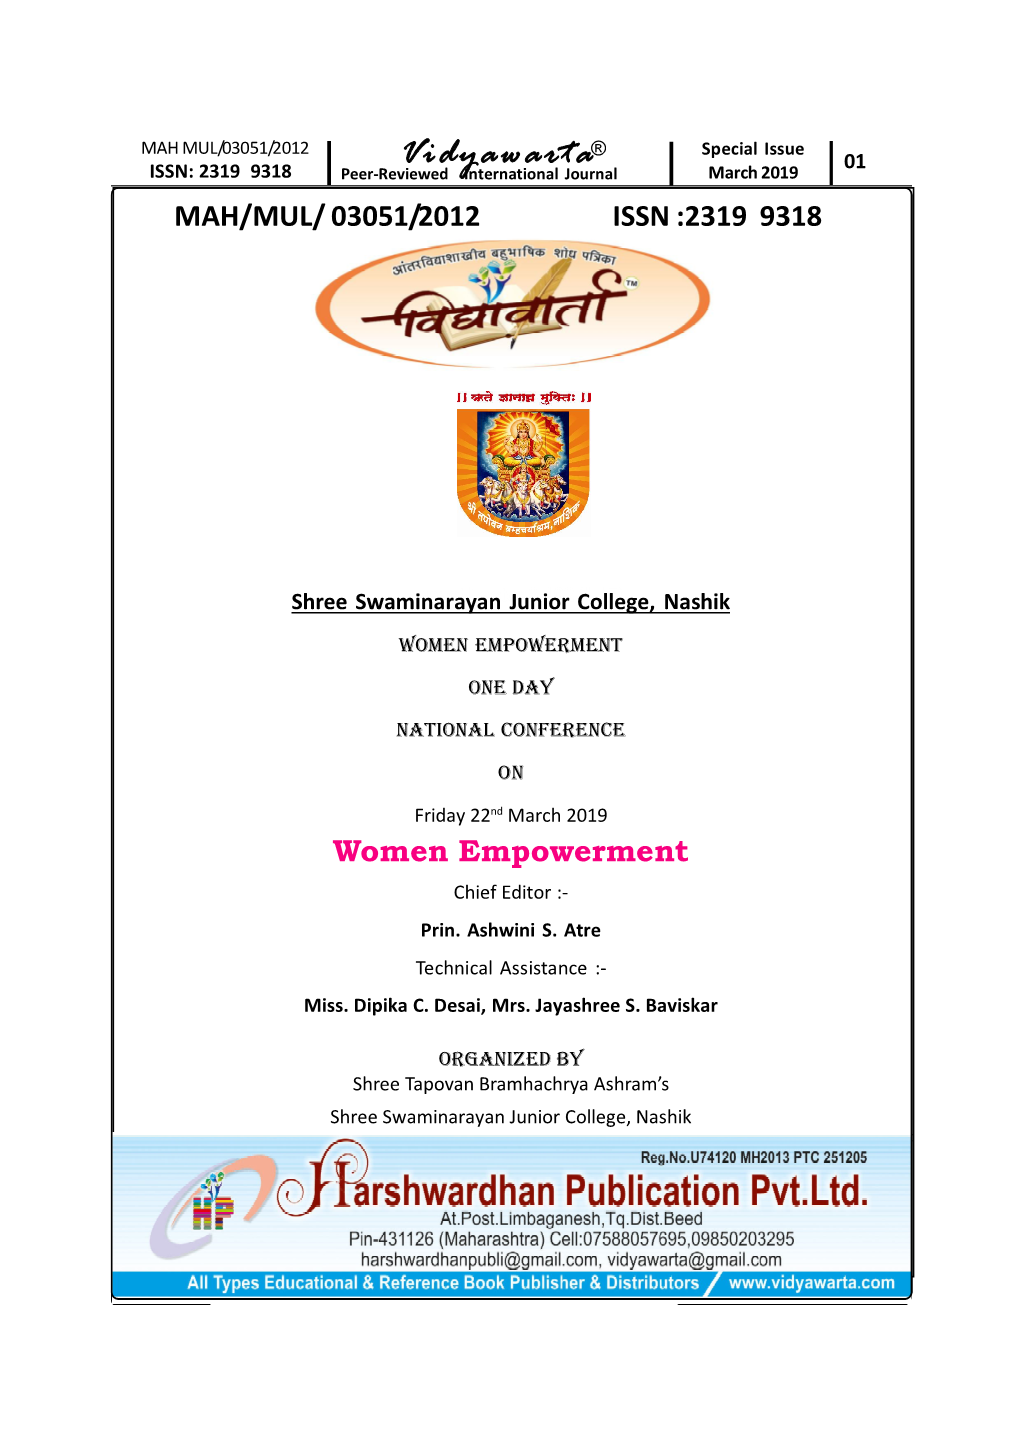 Role of Anutai Wagh in Women Empowerment